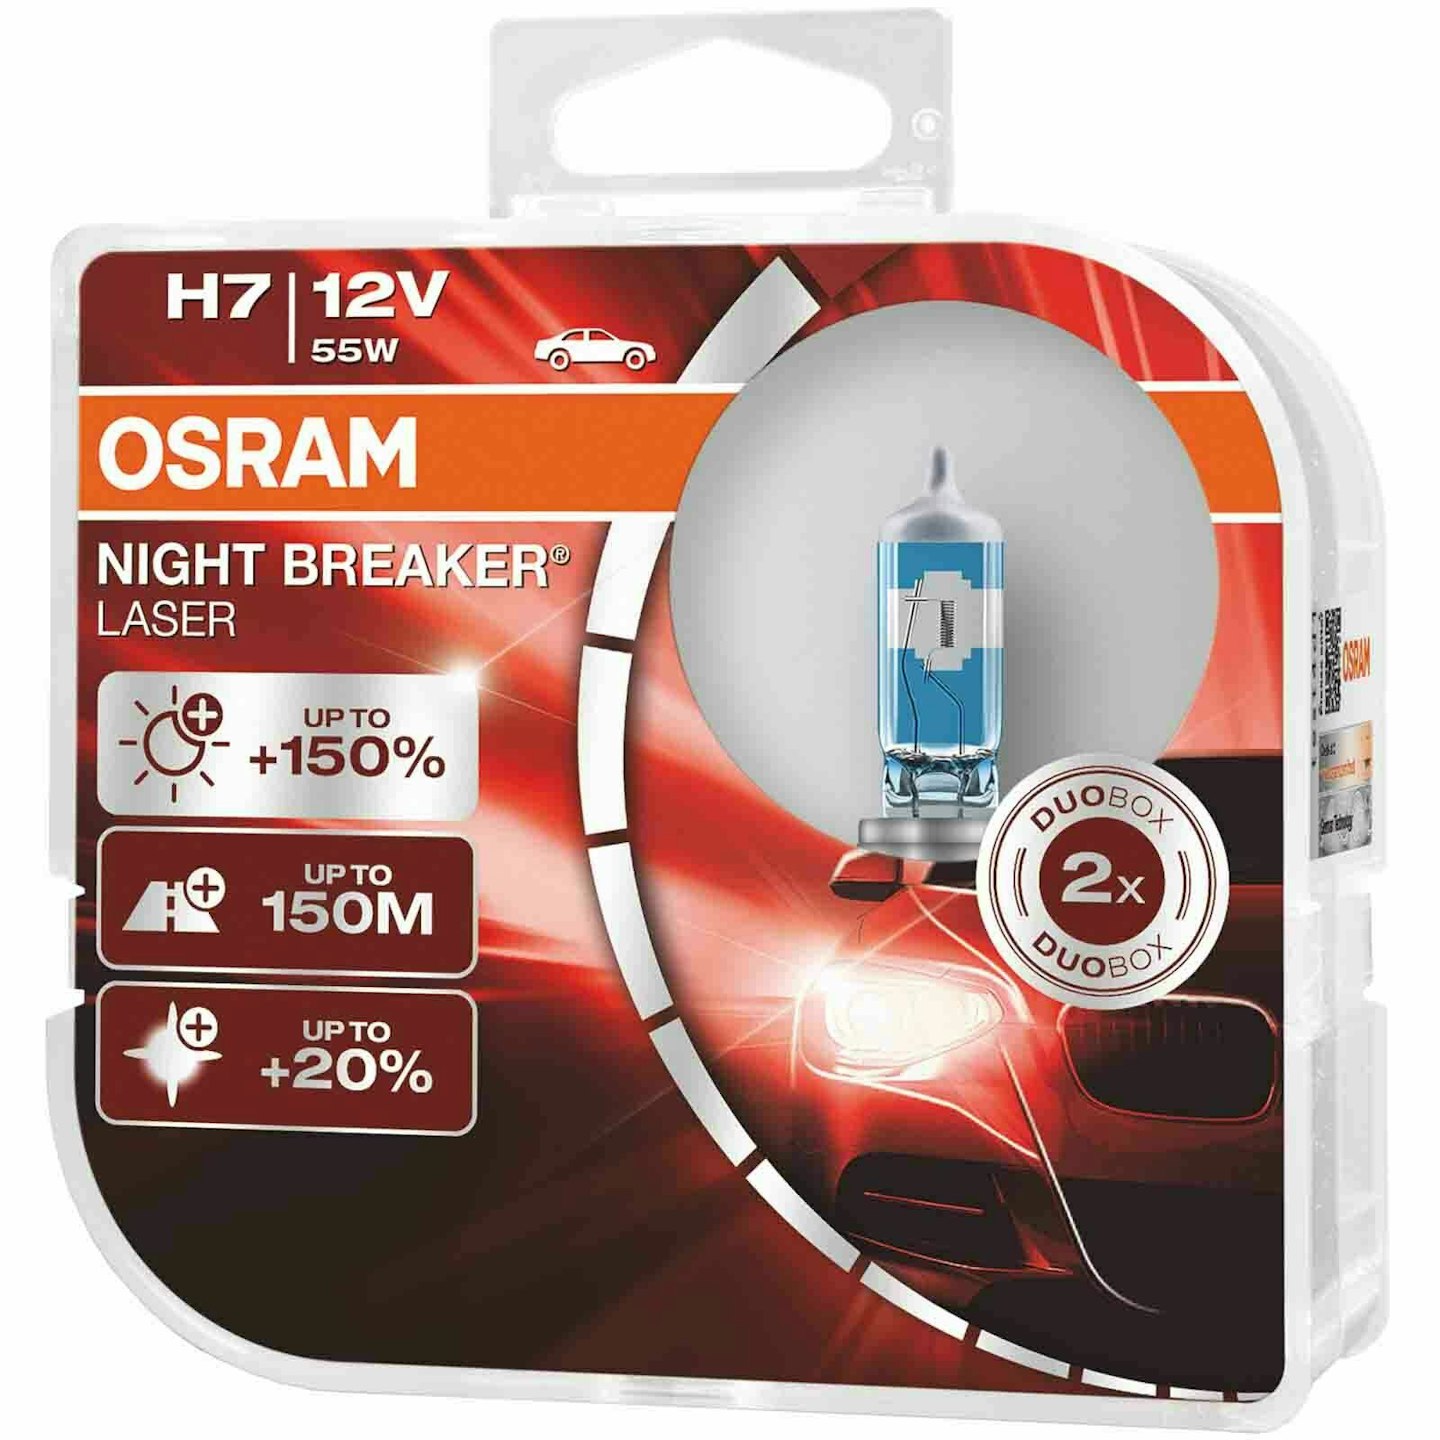 OSRAM Night Breaker Laser H7 Car Headlight Bulbs